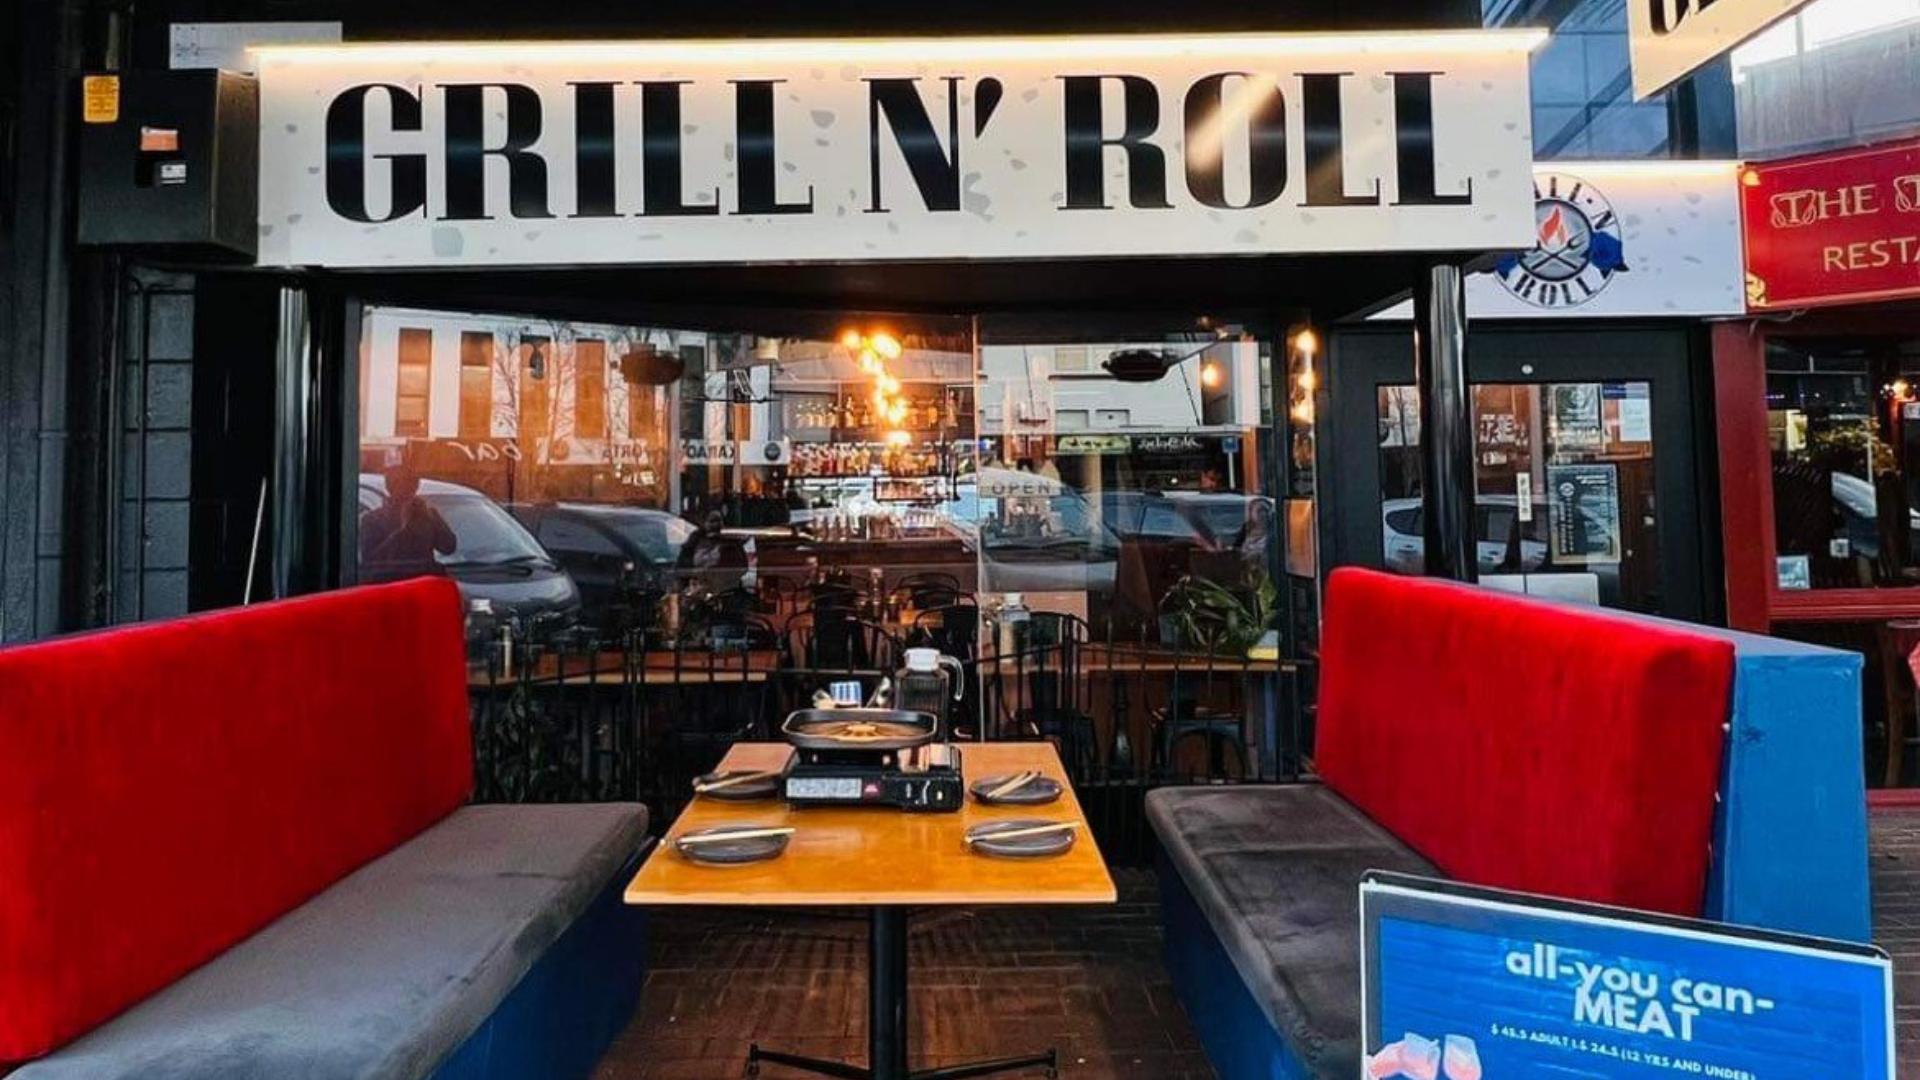 Anroll Restaurant added a new photo. - Anroll Restaurant